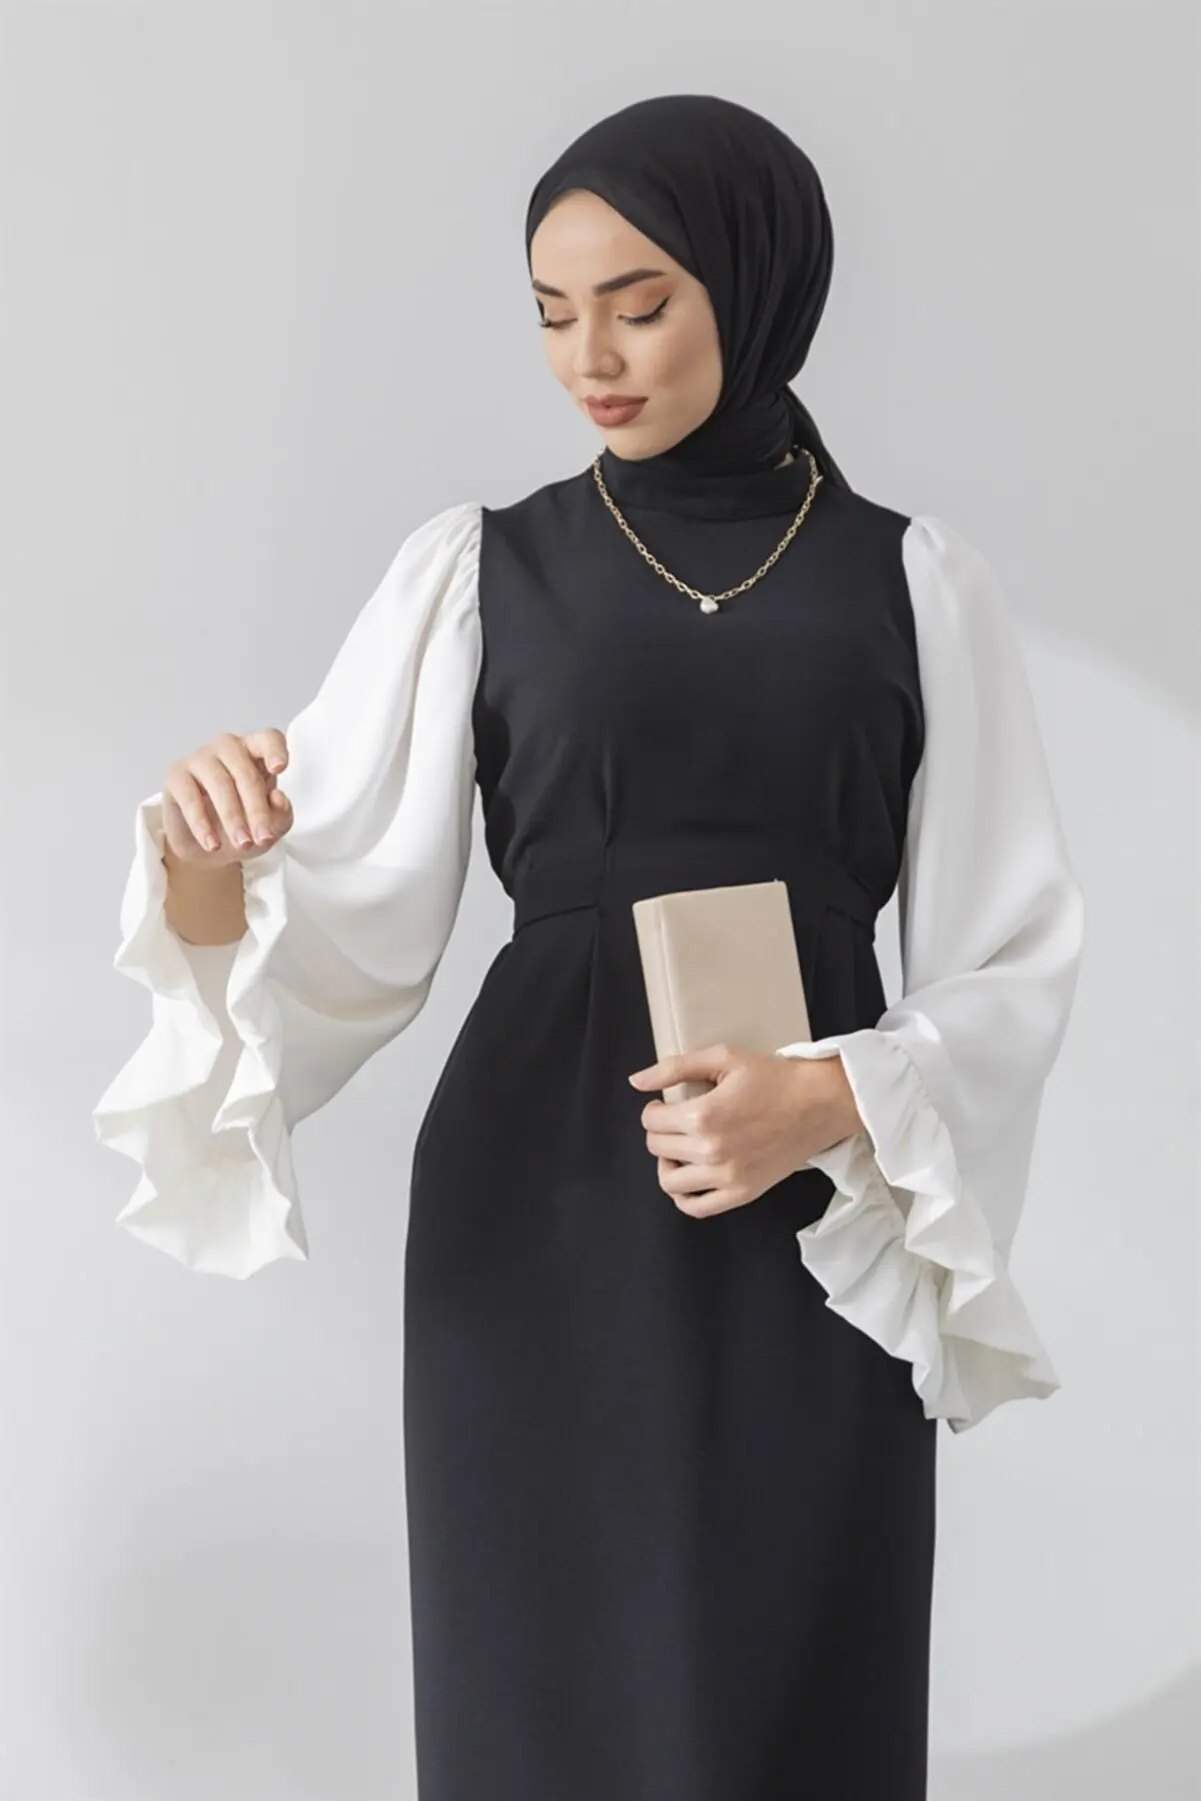 Muslim Women Dress Self-Kemerli Temporary Shed Sleeve Black Dress soft Crepe Fabric 2022 hot summer season Long Ferace Abaya